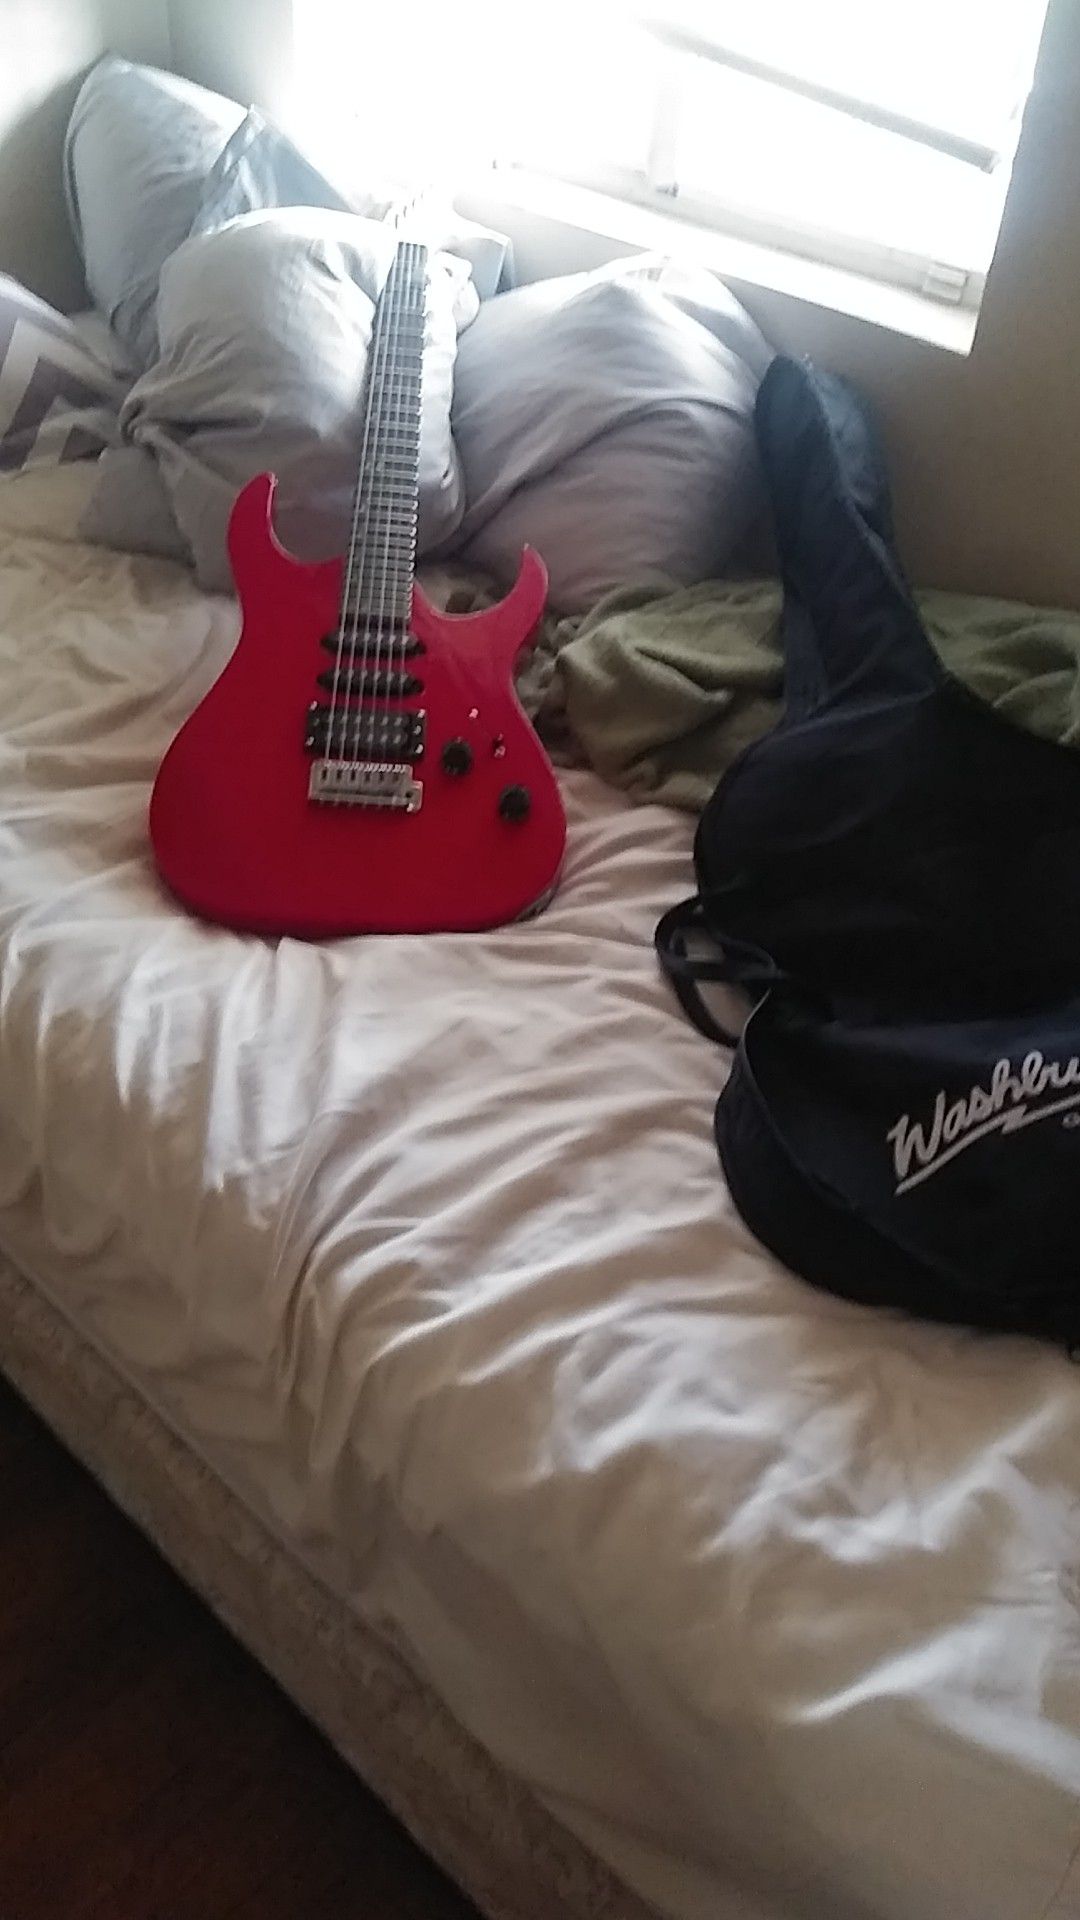 Washburn rocker Series Guitar and bag